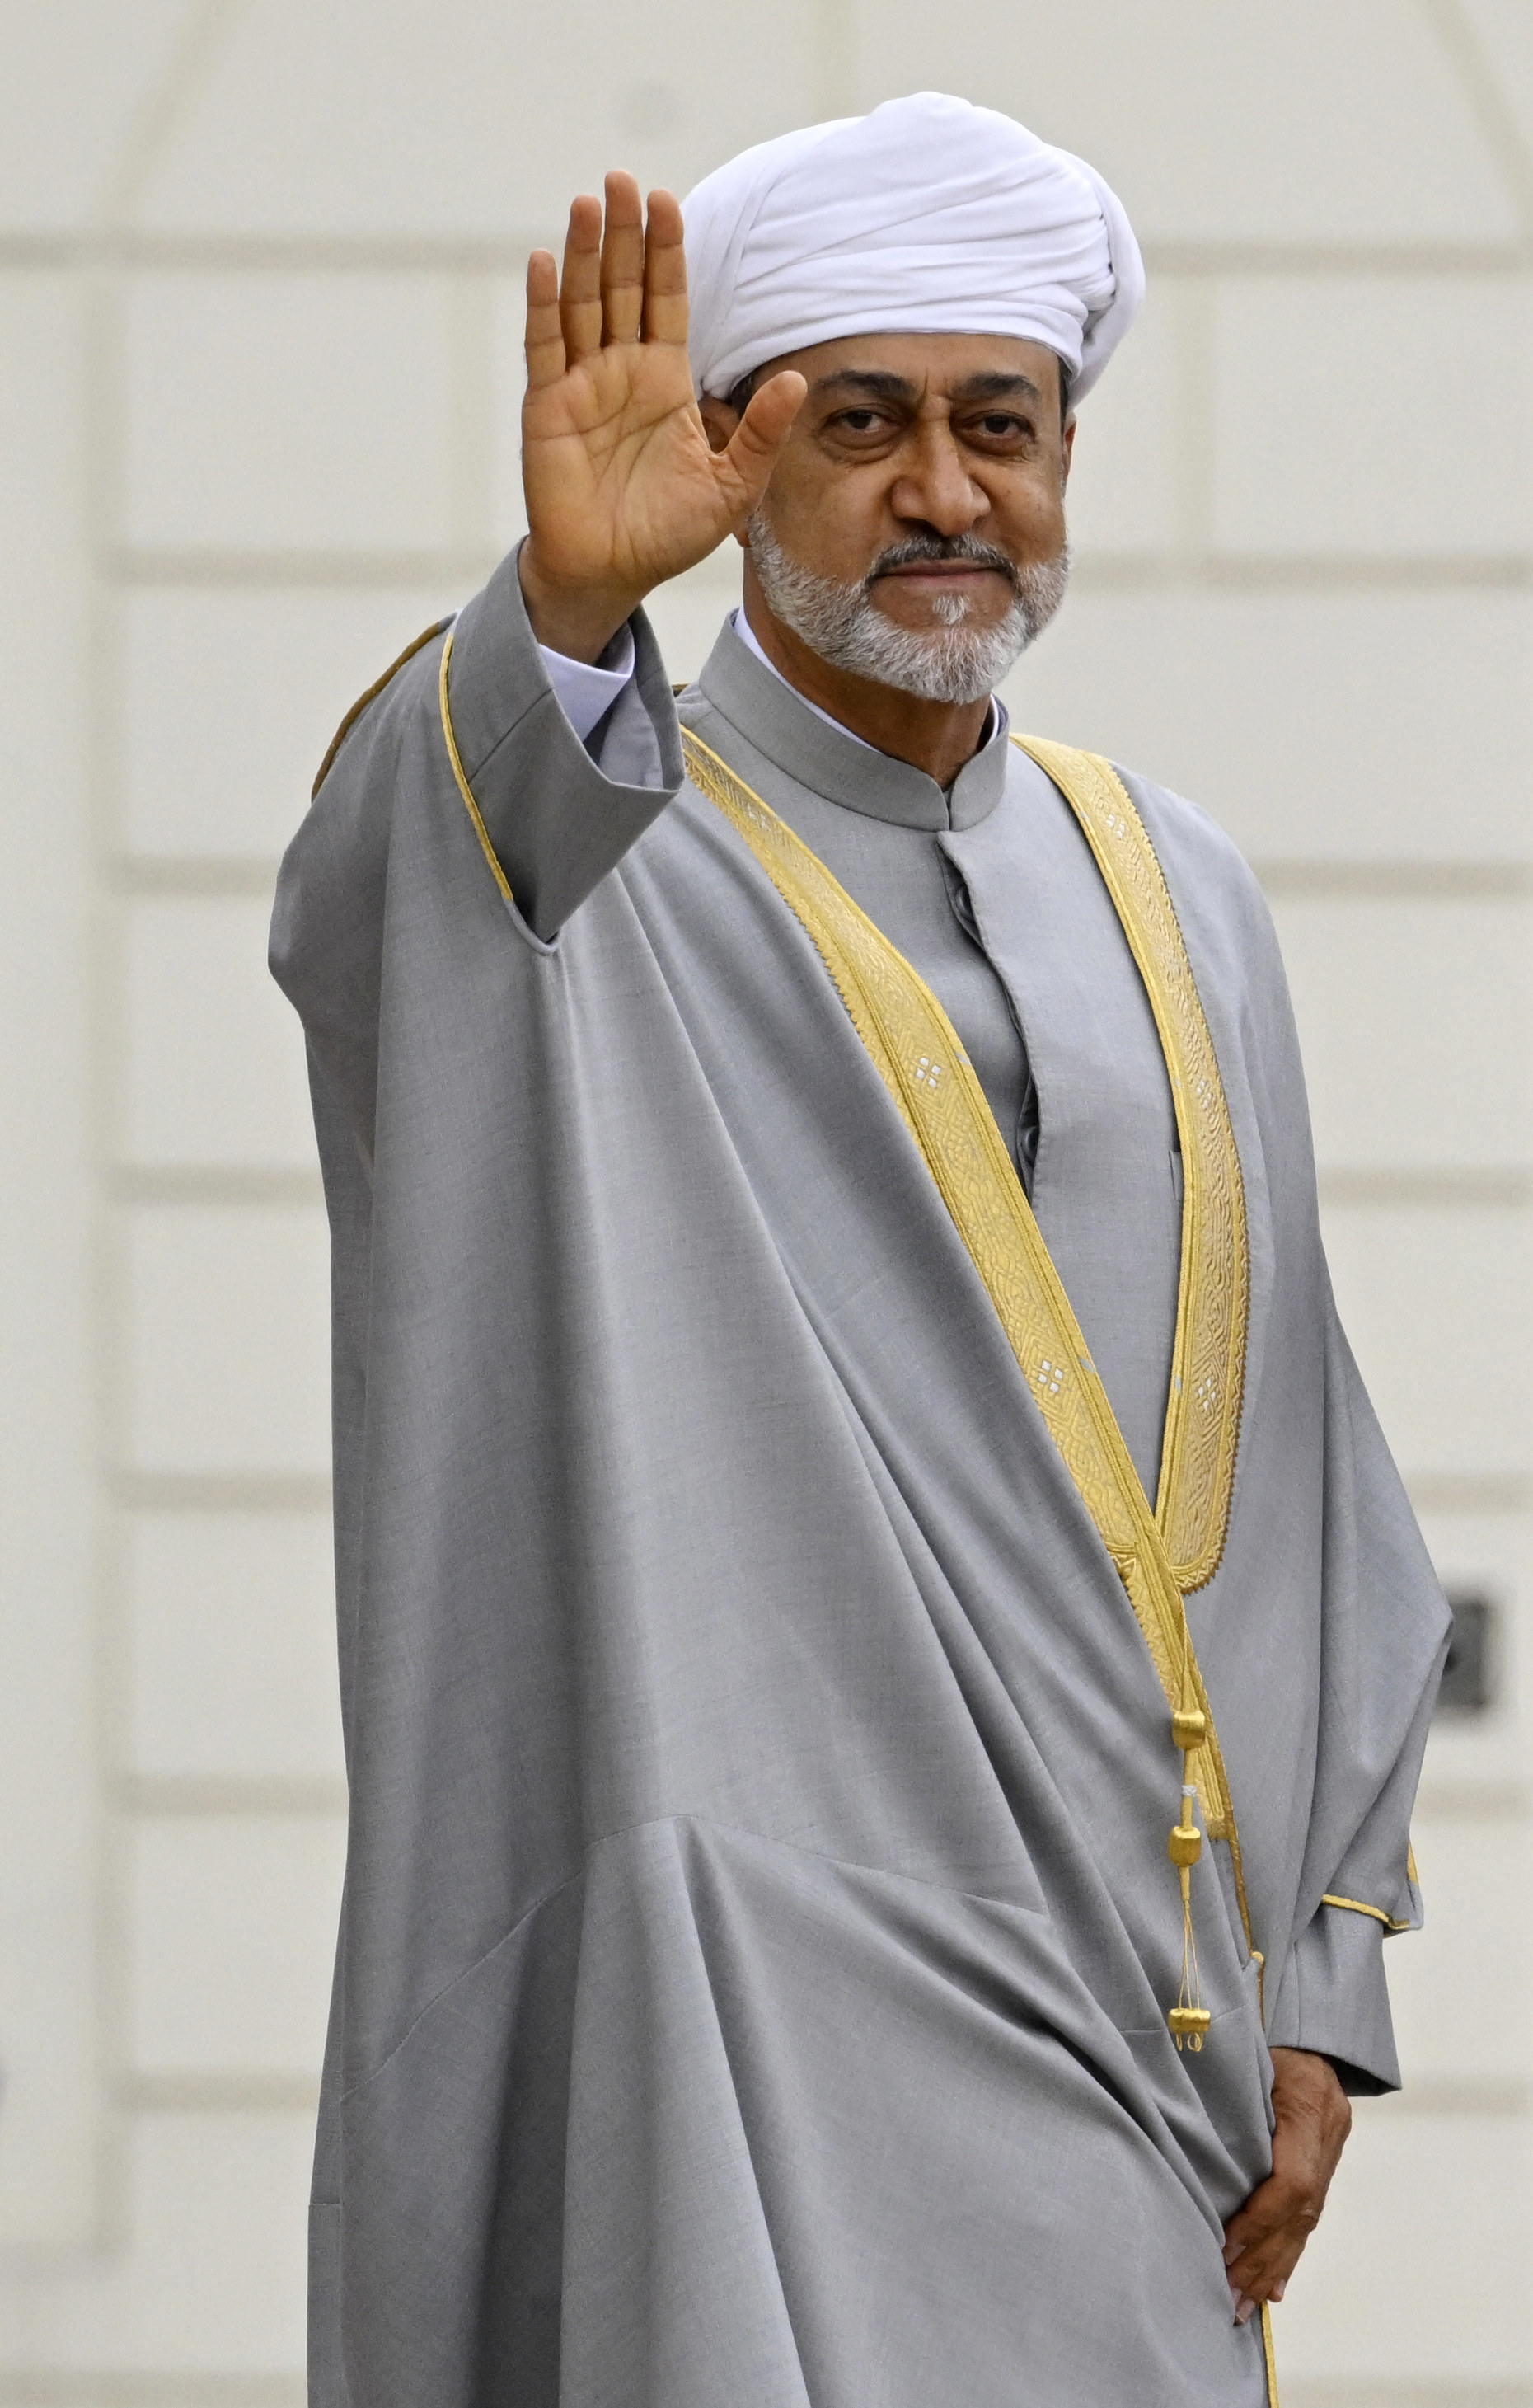 the sultan waving